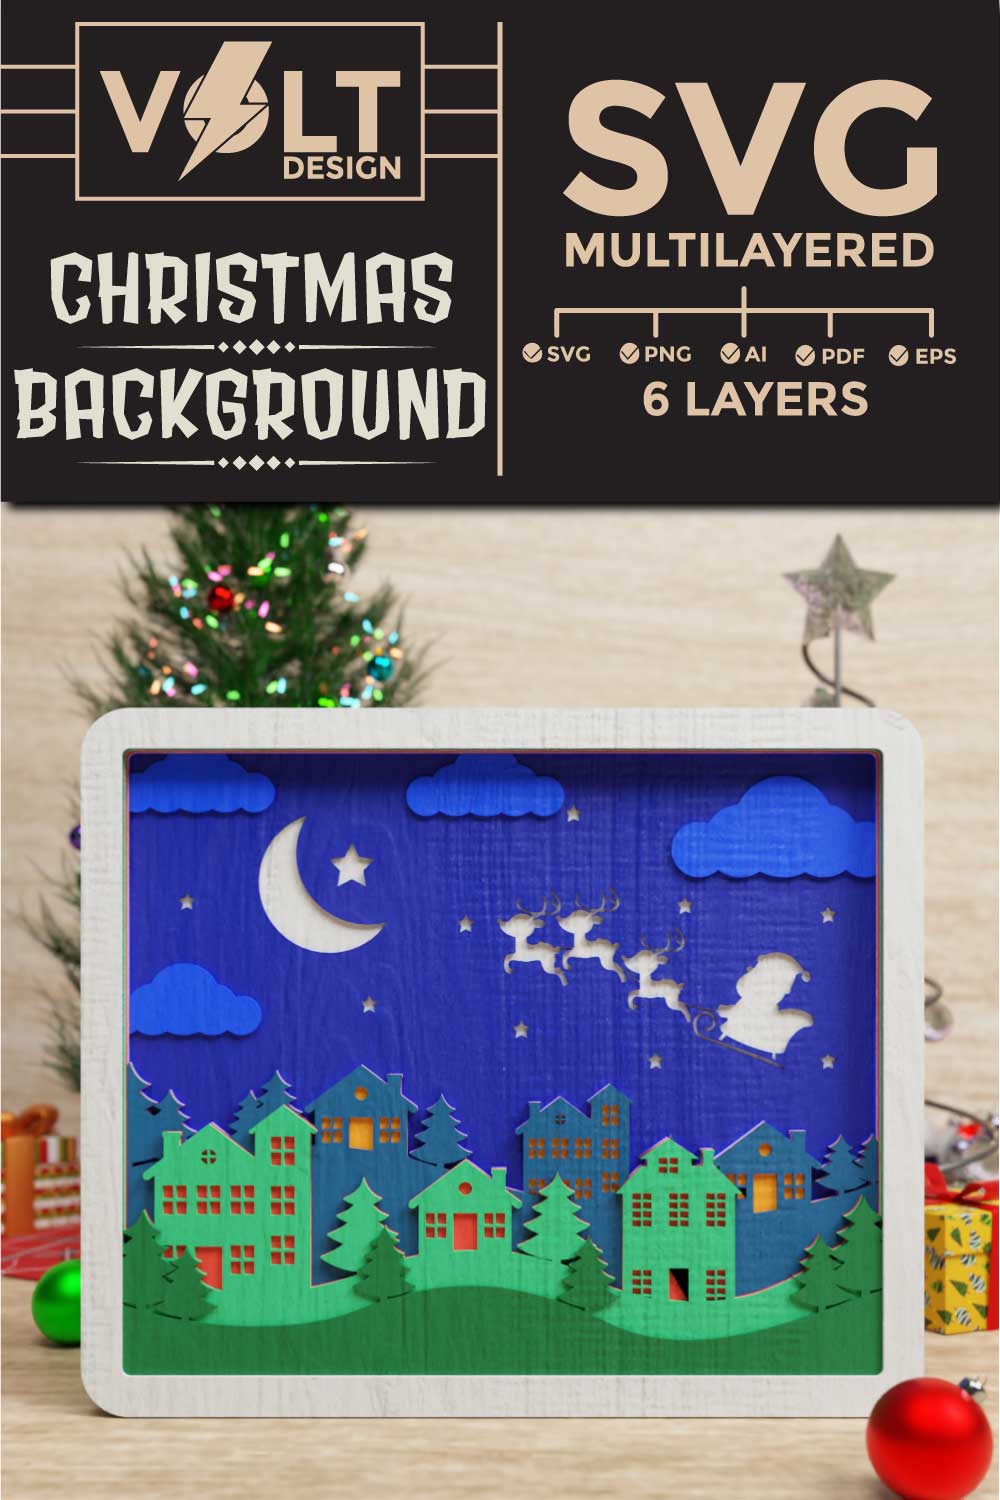 Christmas background 3D SVG multilayered pinterest preview image.